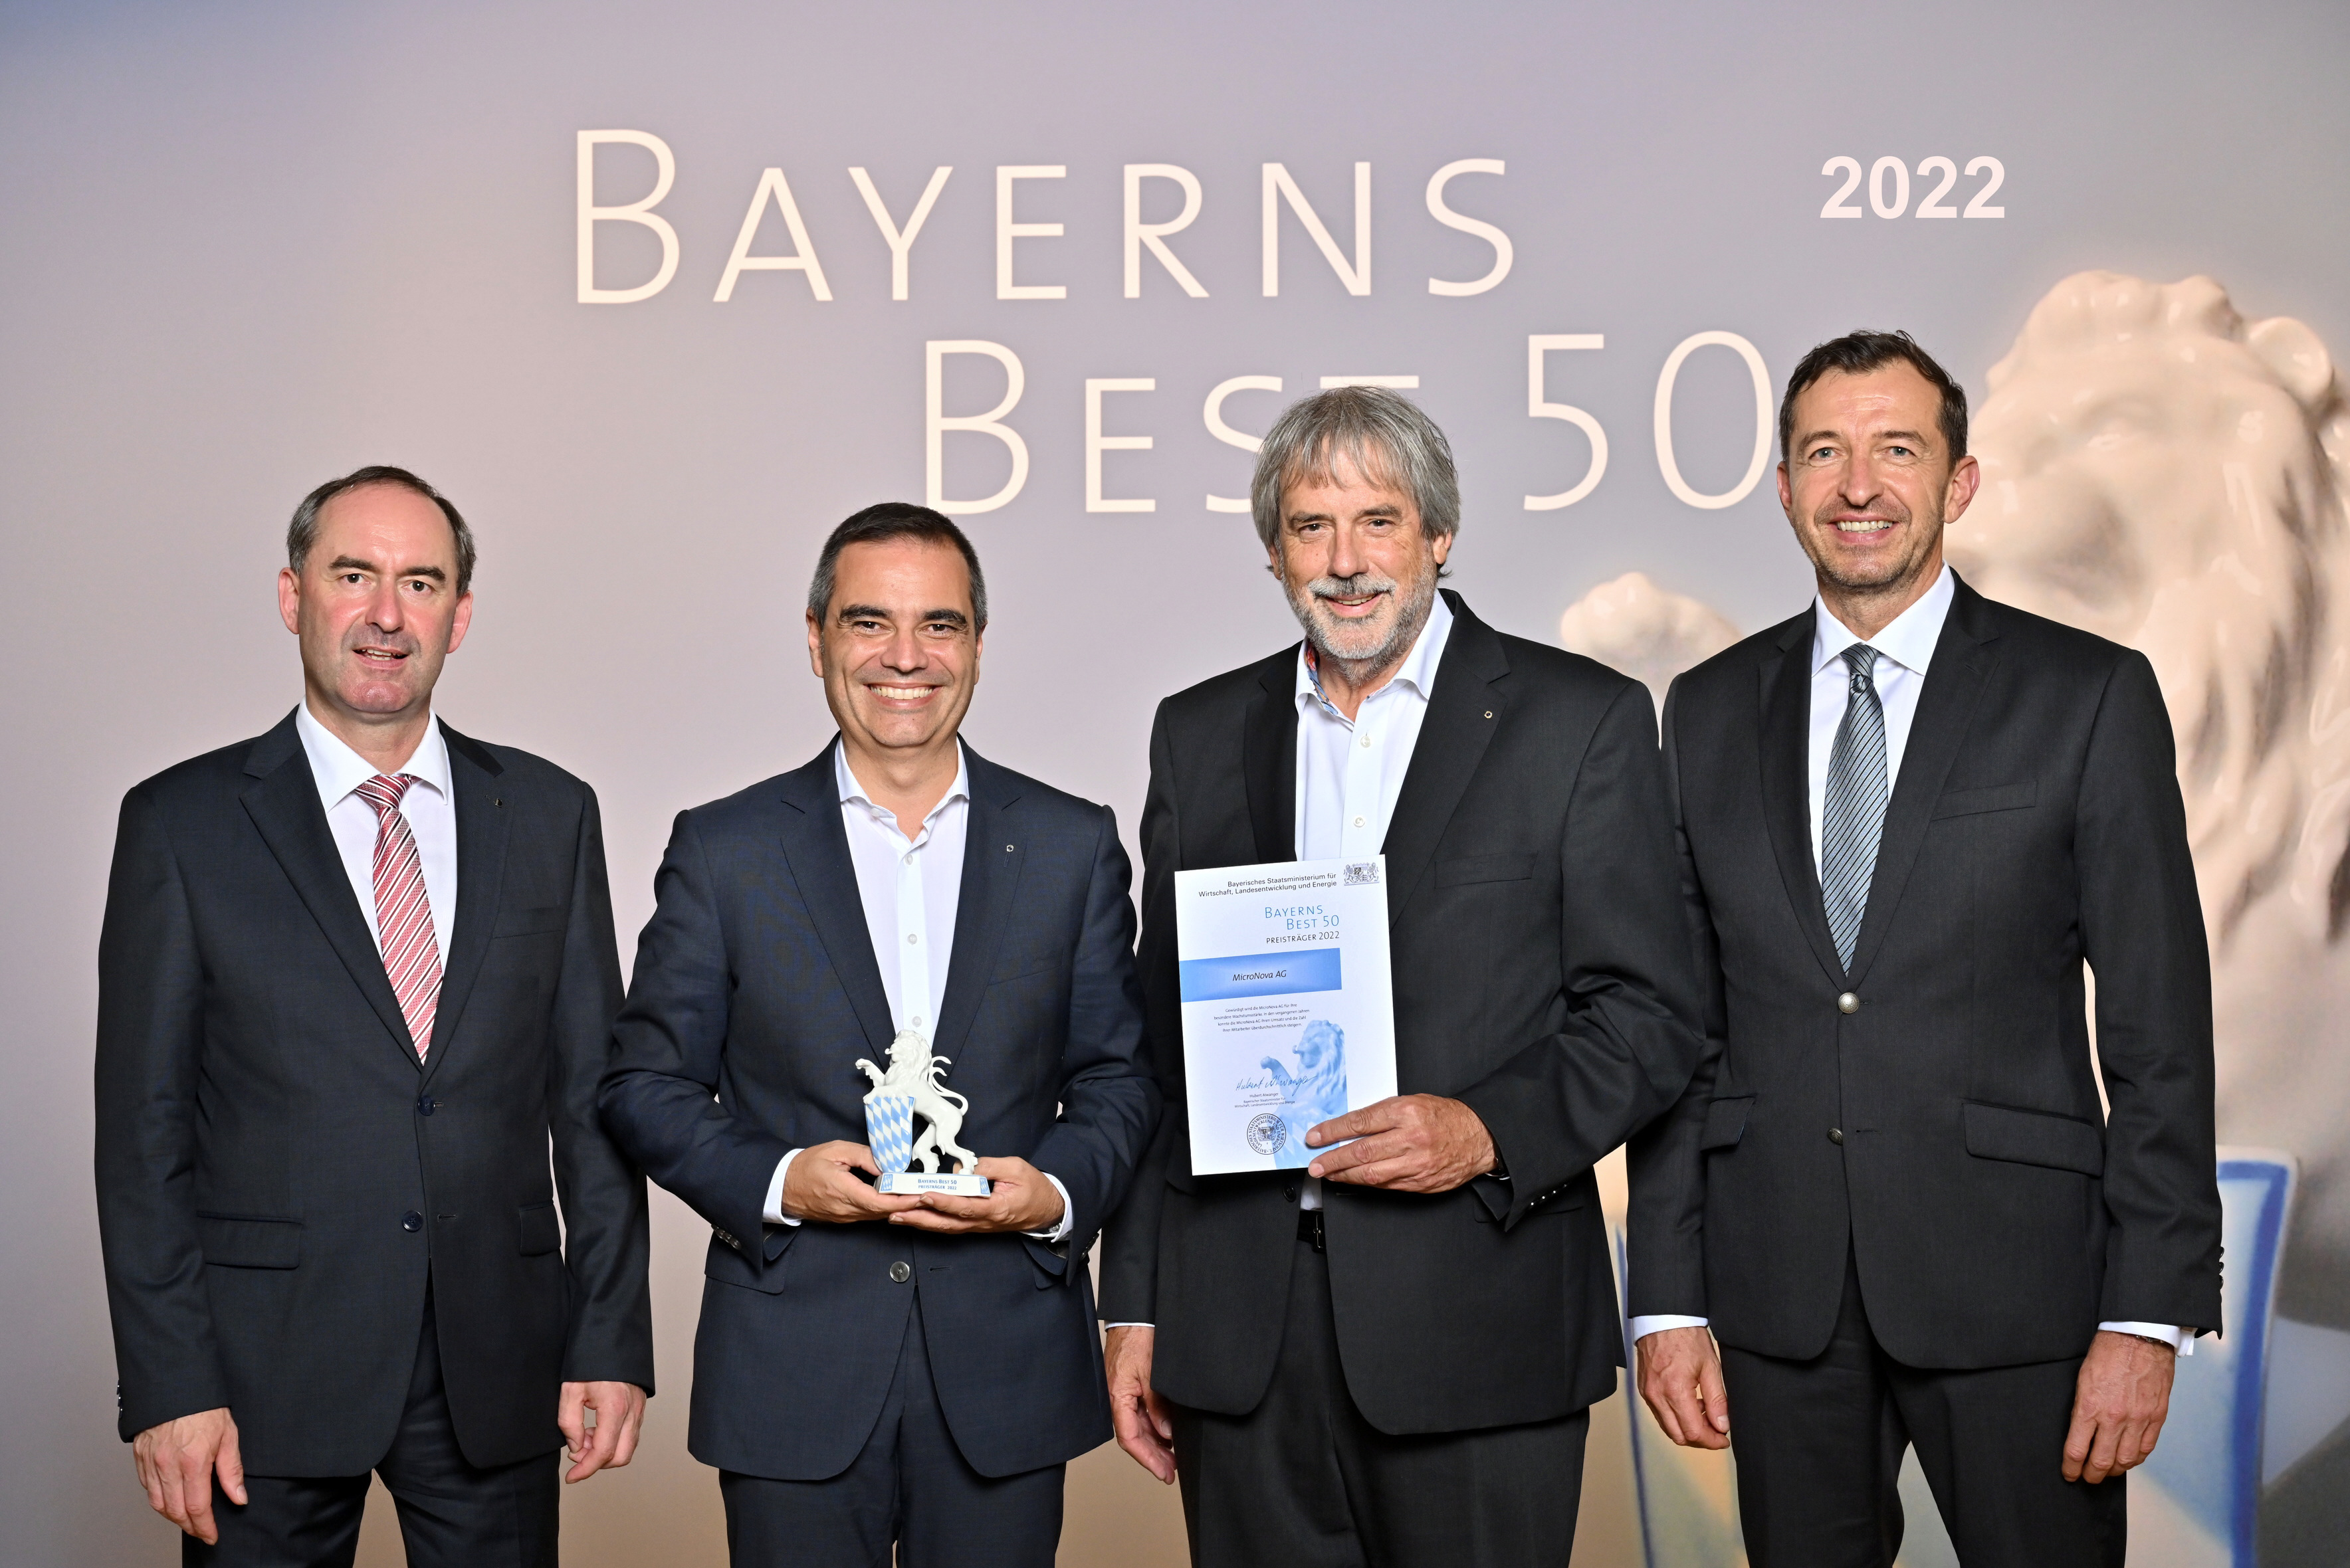 BayernsBest50 Award Ceremony MicroNova 2022